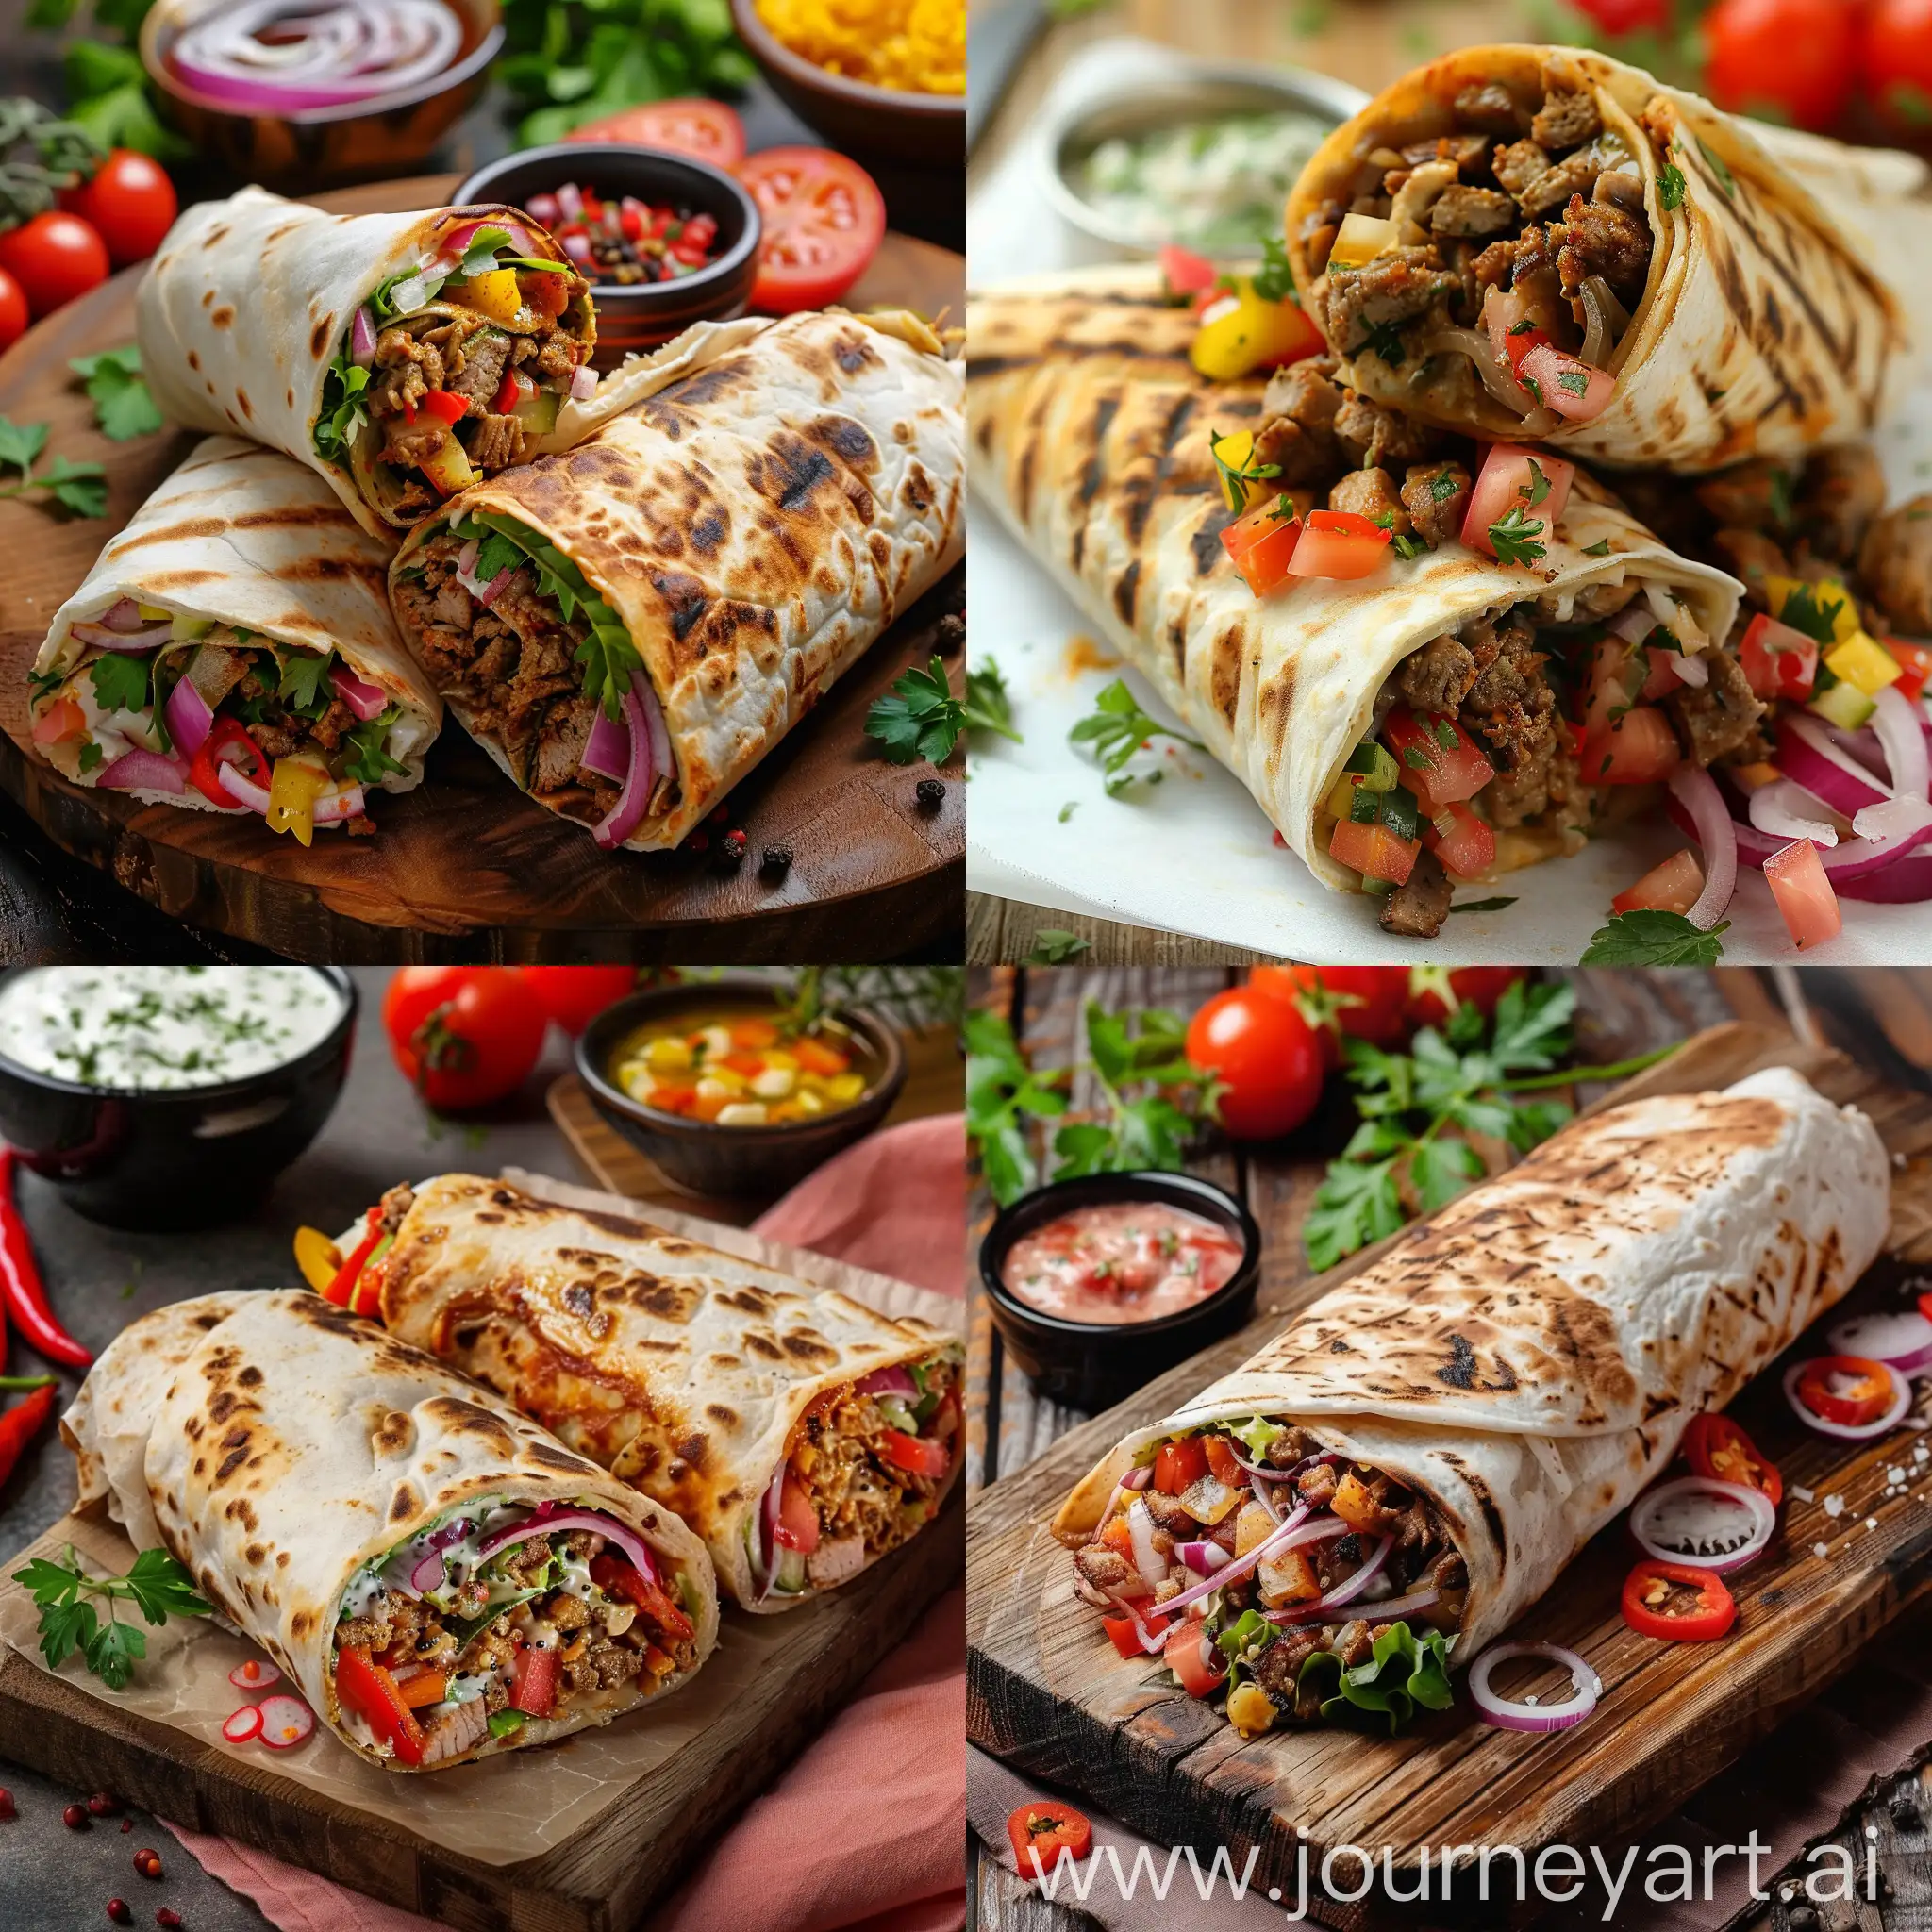 Vibrant-Shawarma-Menu-Delicious-Middle-Eastern-Delicacies-in-Colorful-Display